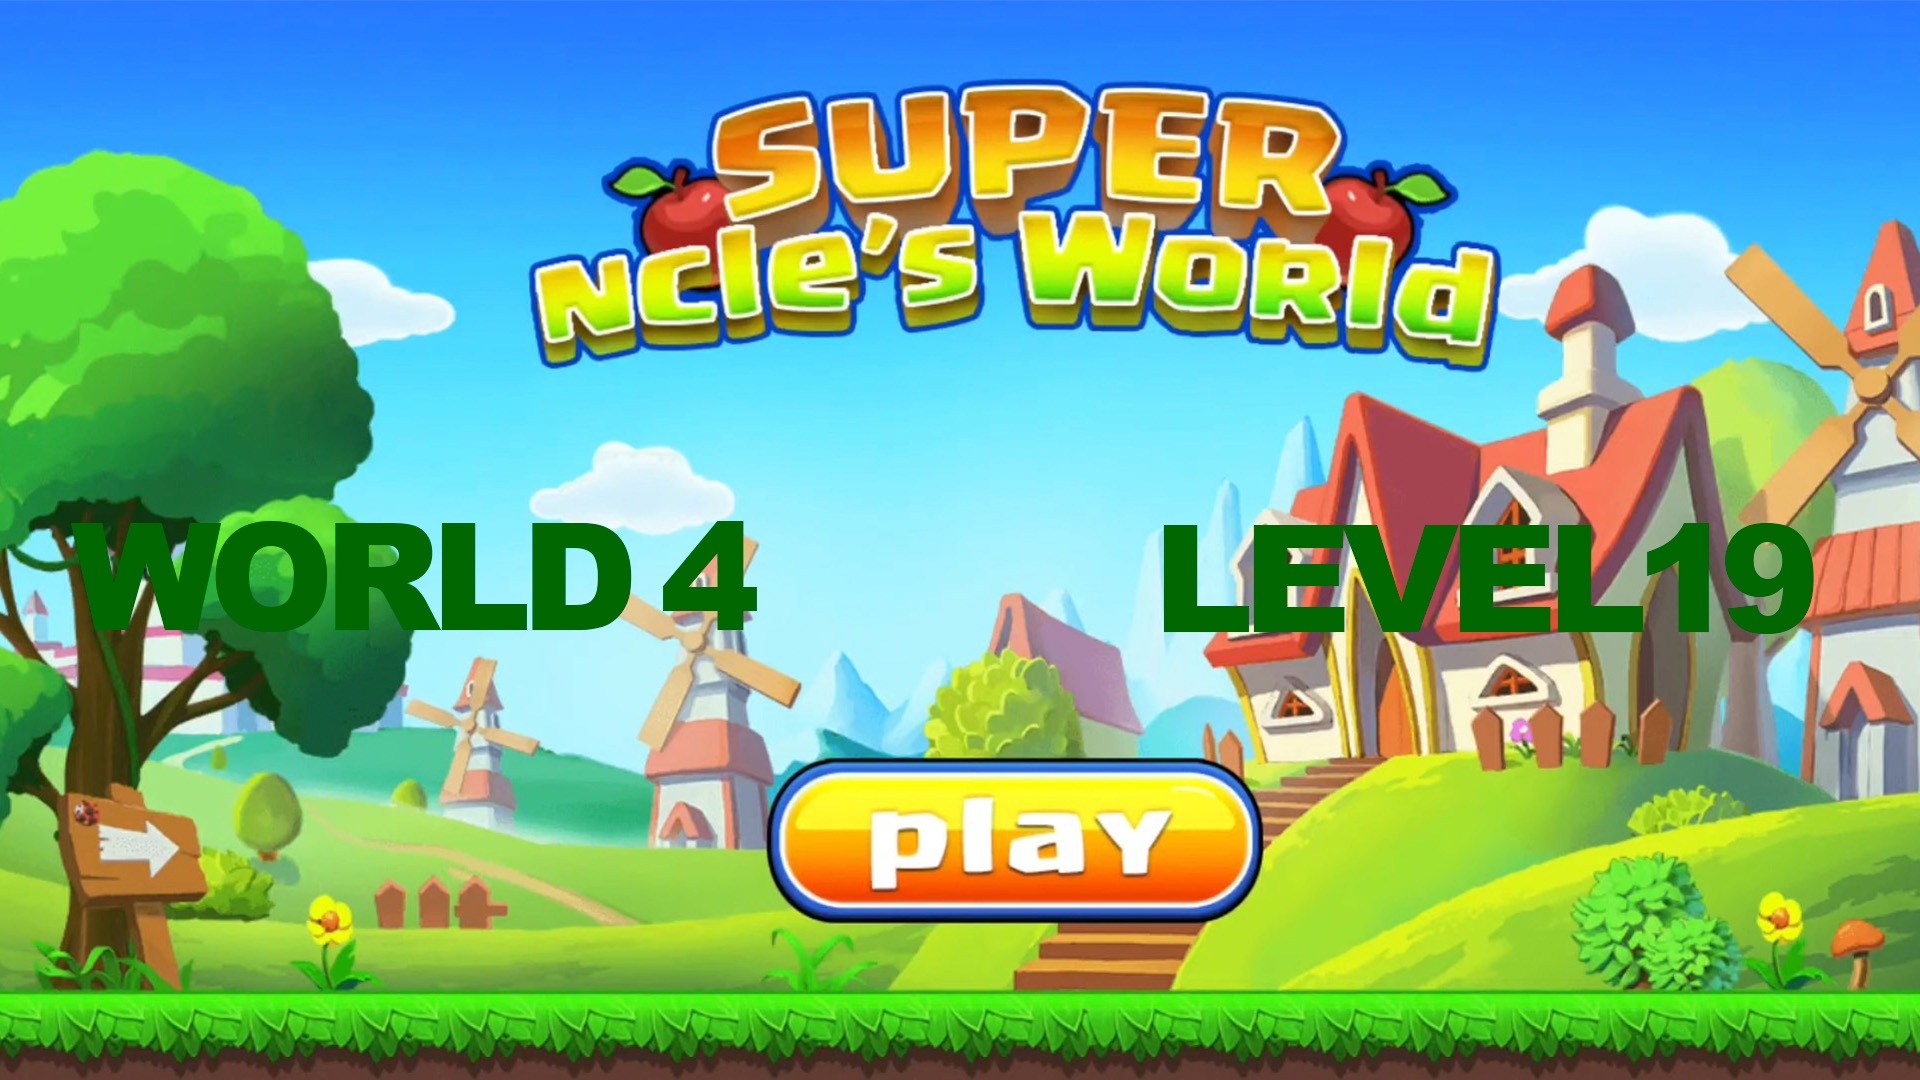 Super ncle's  World 4. Level 19.